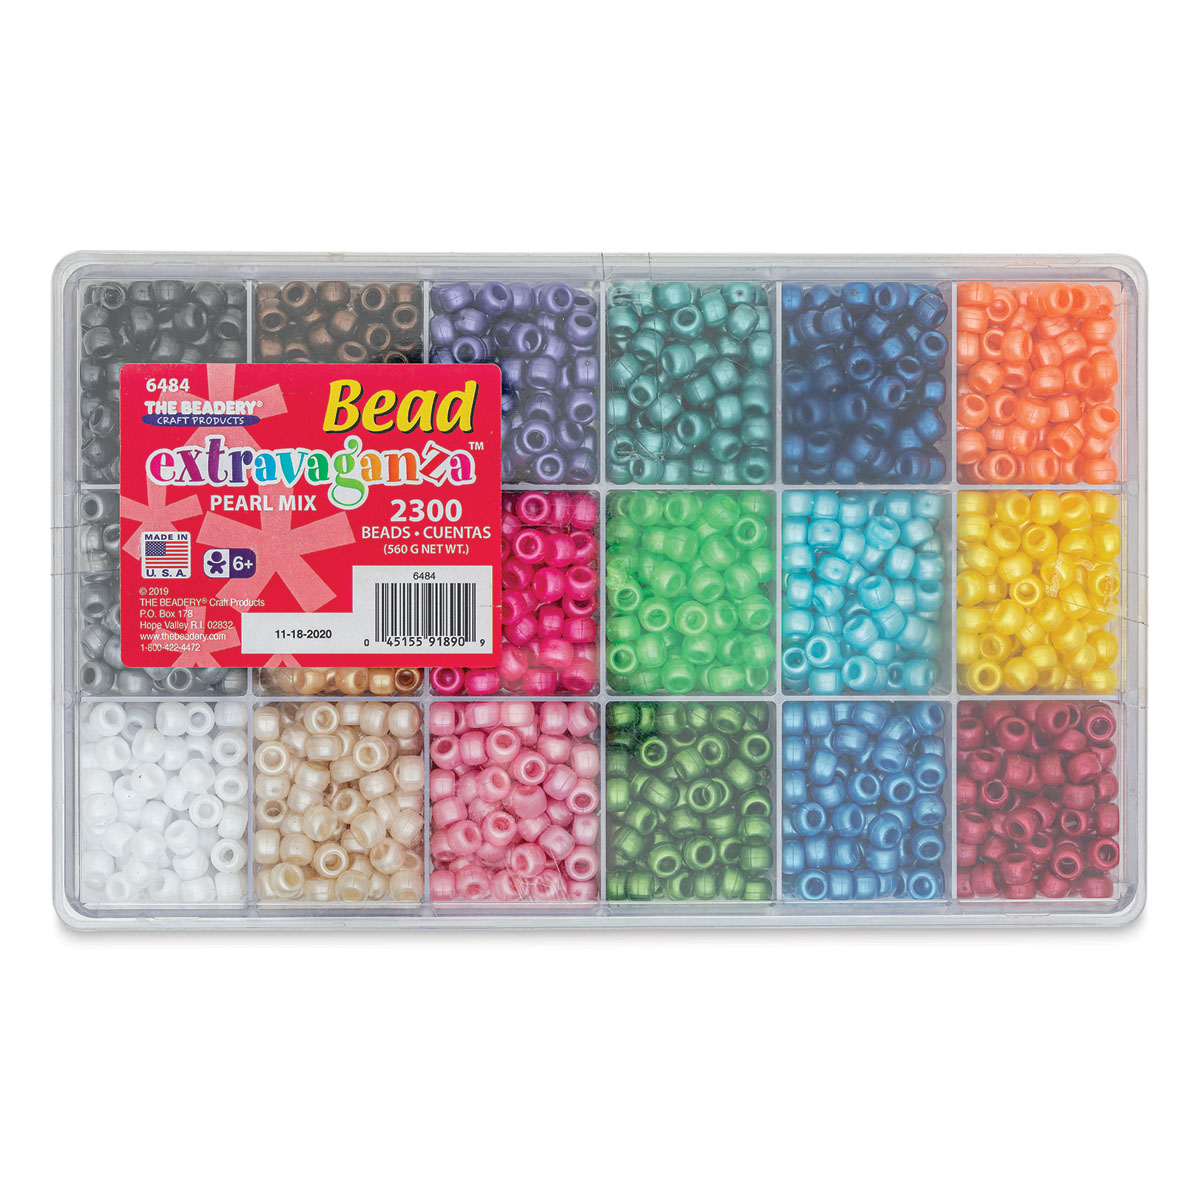 Bead Extravaganza Pearl Mix Bead Box